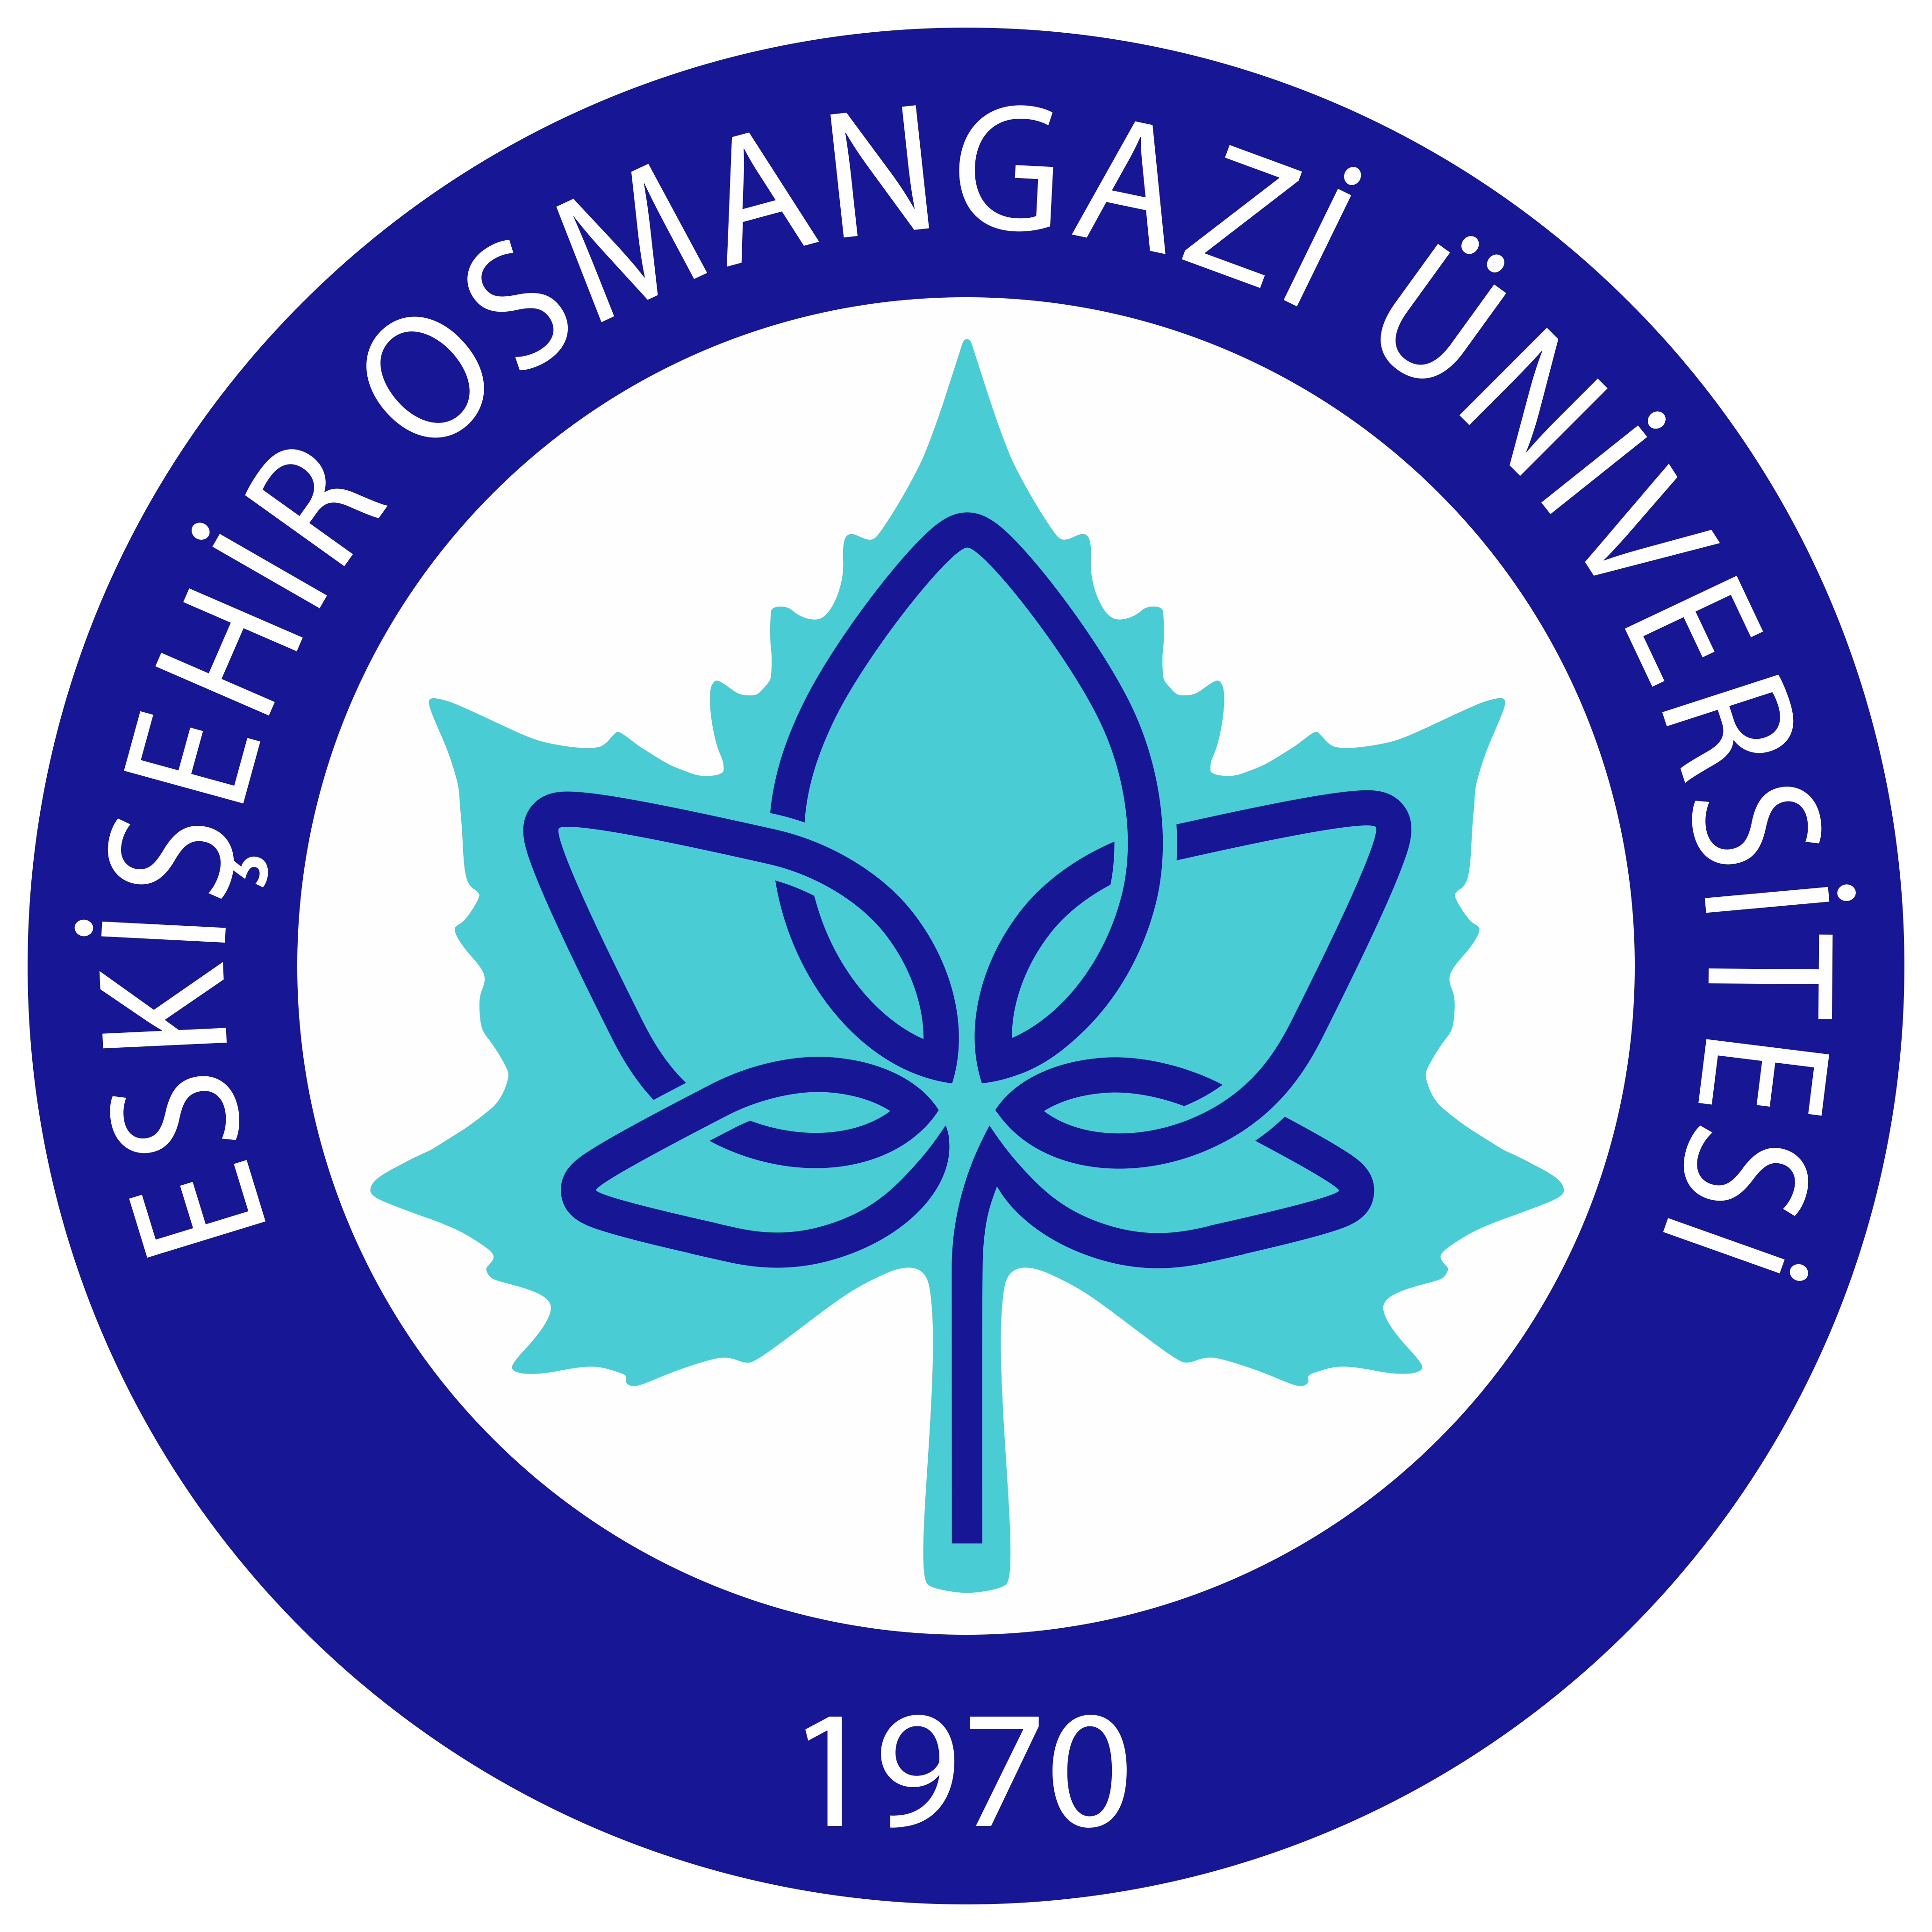 Eskişehir Osmangazi Üniversitesi